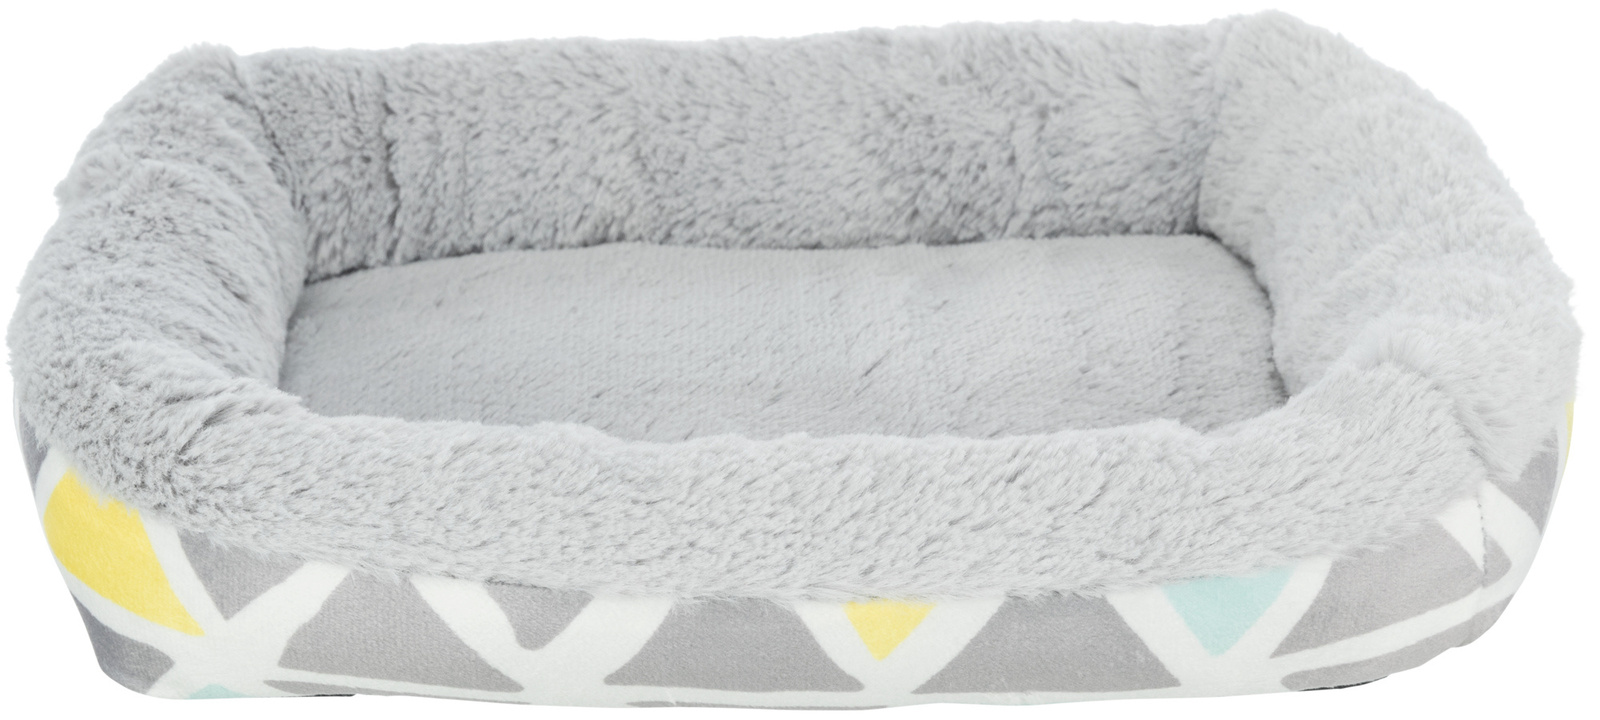 Trixie лежак с бортиком Bunny, плюш, 30 х 6 х 22 см, разноцветный/серый (38 х 7 х 25 см)